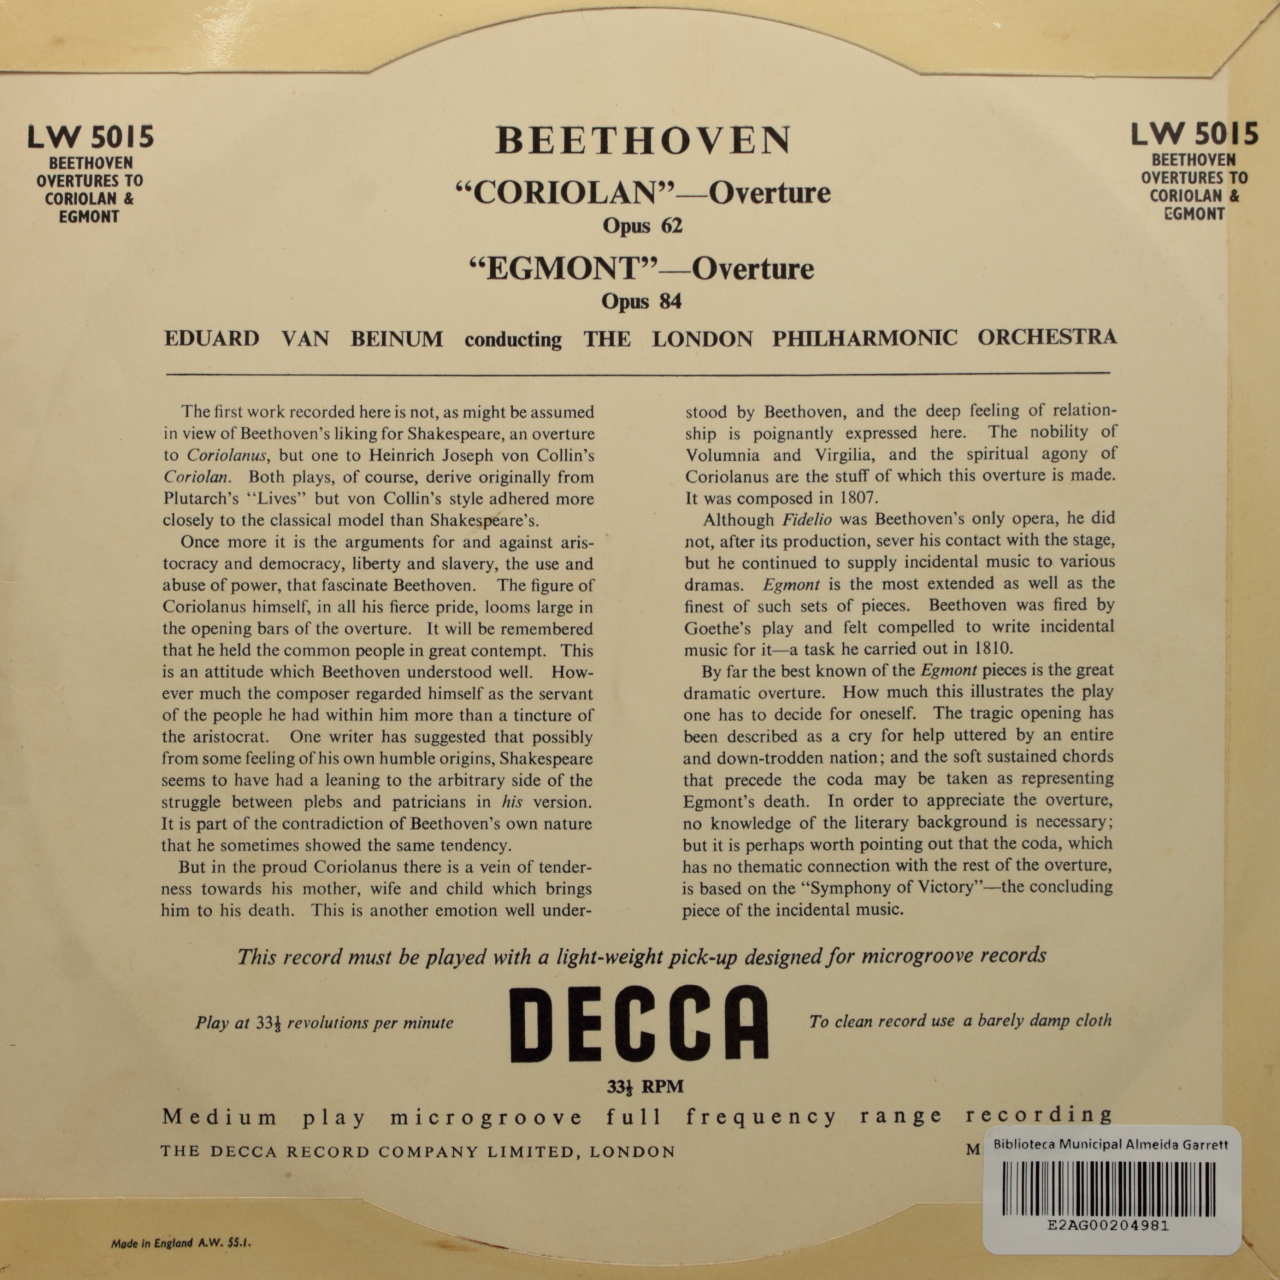 Beethoven: Coriolan Overture/Egmont Overture